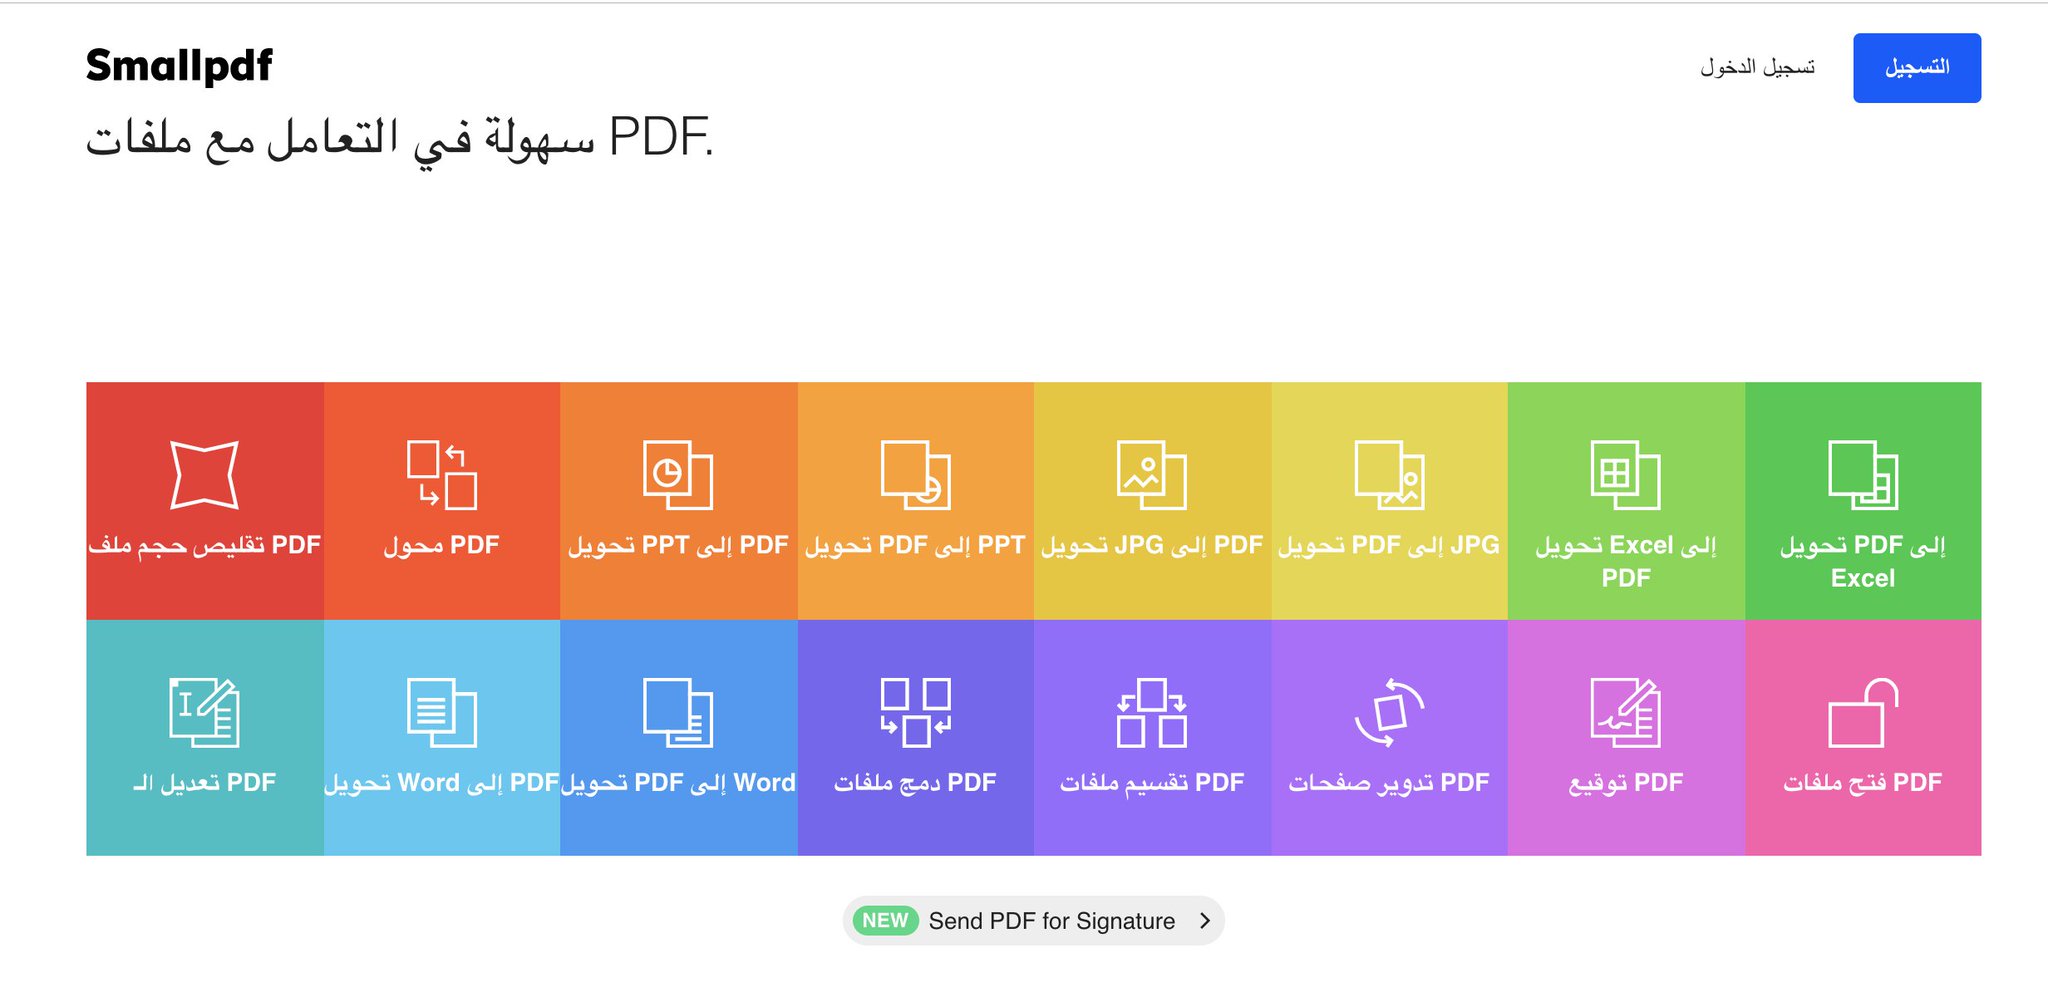 Logohut on X: "موقع Smallpdf للتعامل مع ملفات #pdf والداعم لأكثر من 17 لغة  ومنها العربية : - تقليص حجم ملفات pdf - تعديل وفتح ملفات pdf - تحويل إلى  صور ومن